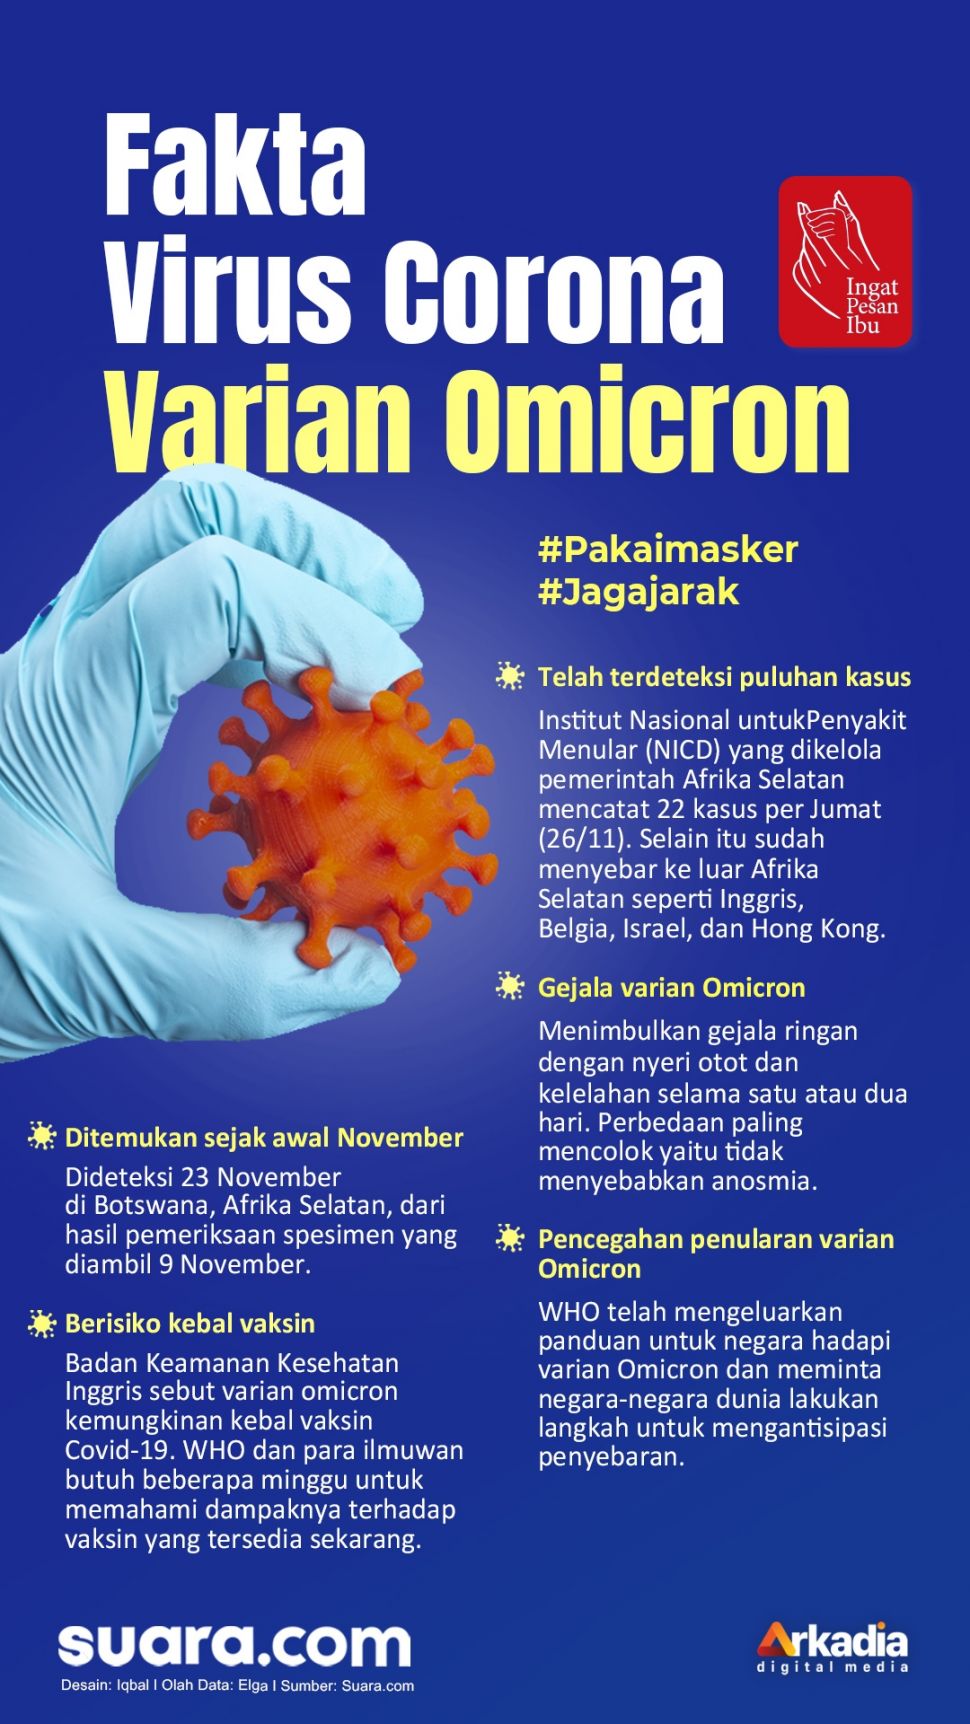 Omicron varian COVID Omicron